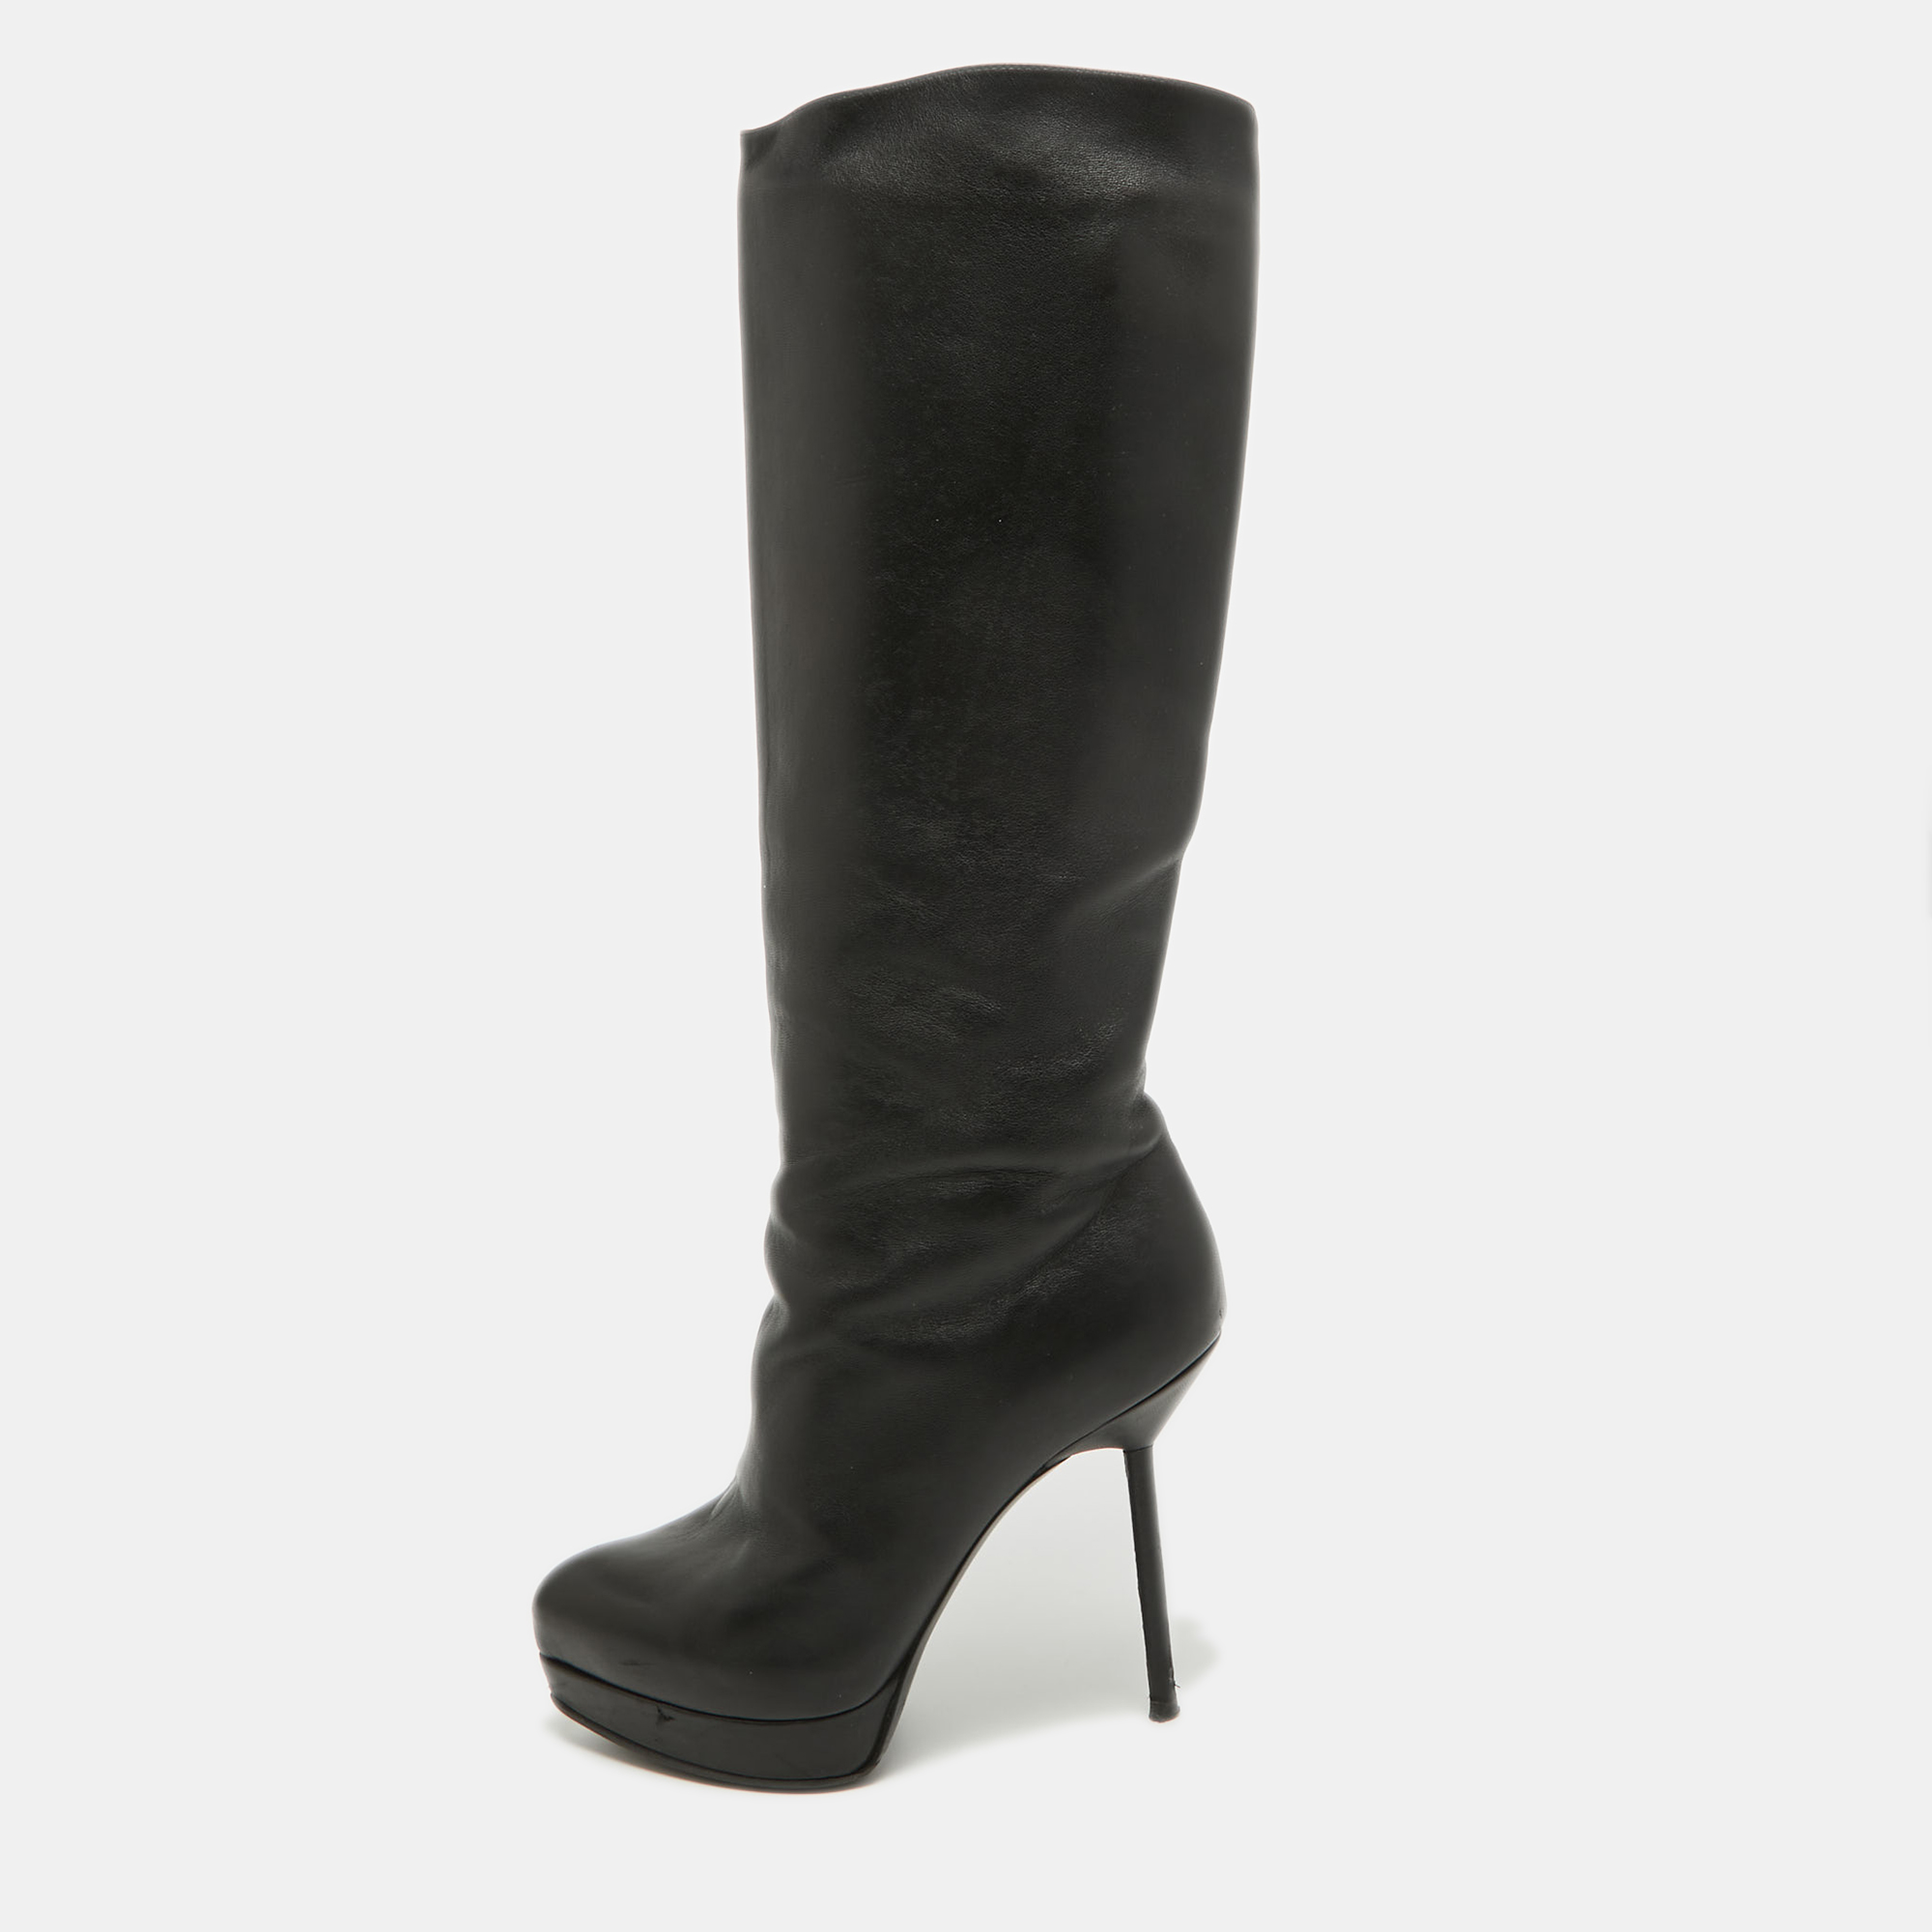 Yves saint laurent black leather platform knee length boots size 36